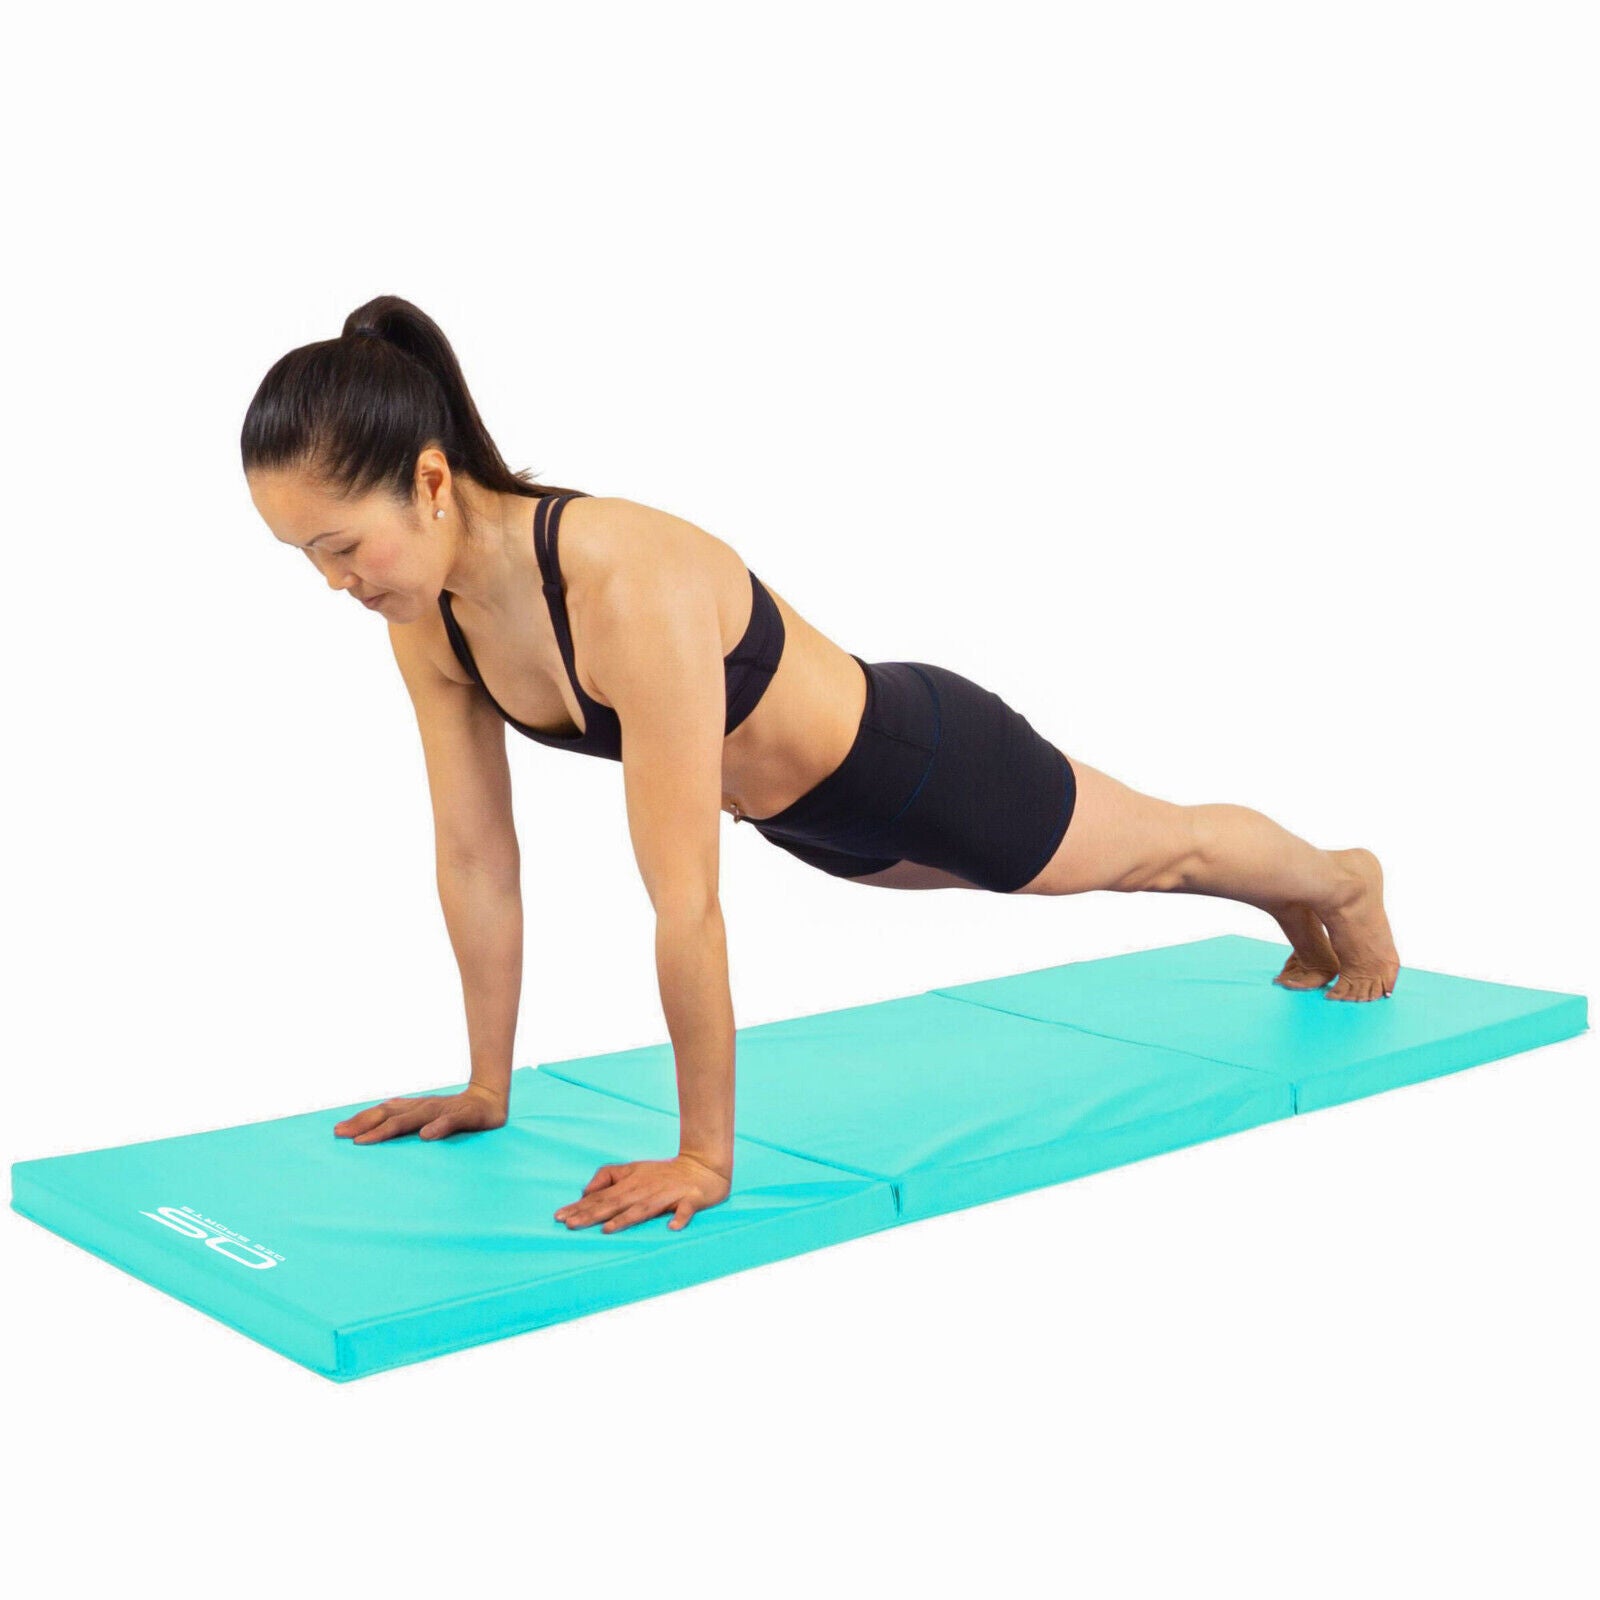 Foldable Gymnastics Mat UK - Exercise Crash Yoga mats Aerobic Jump